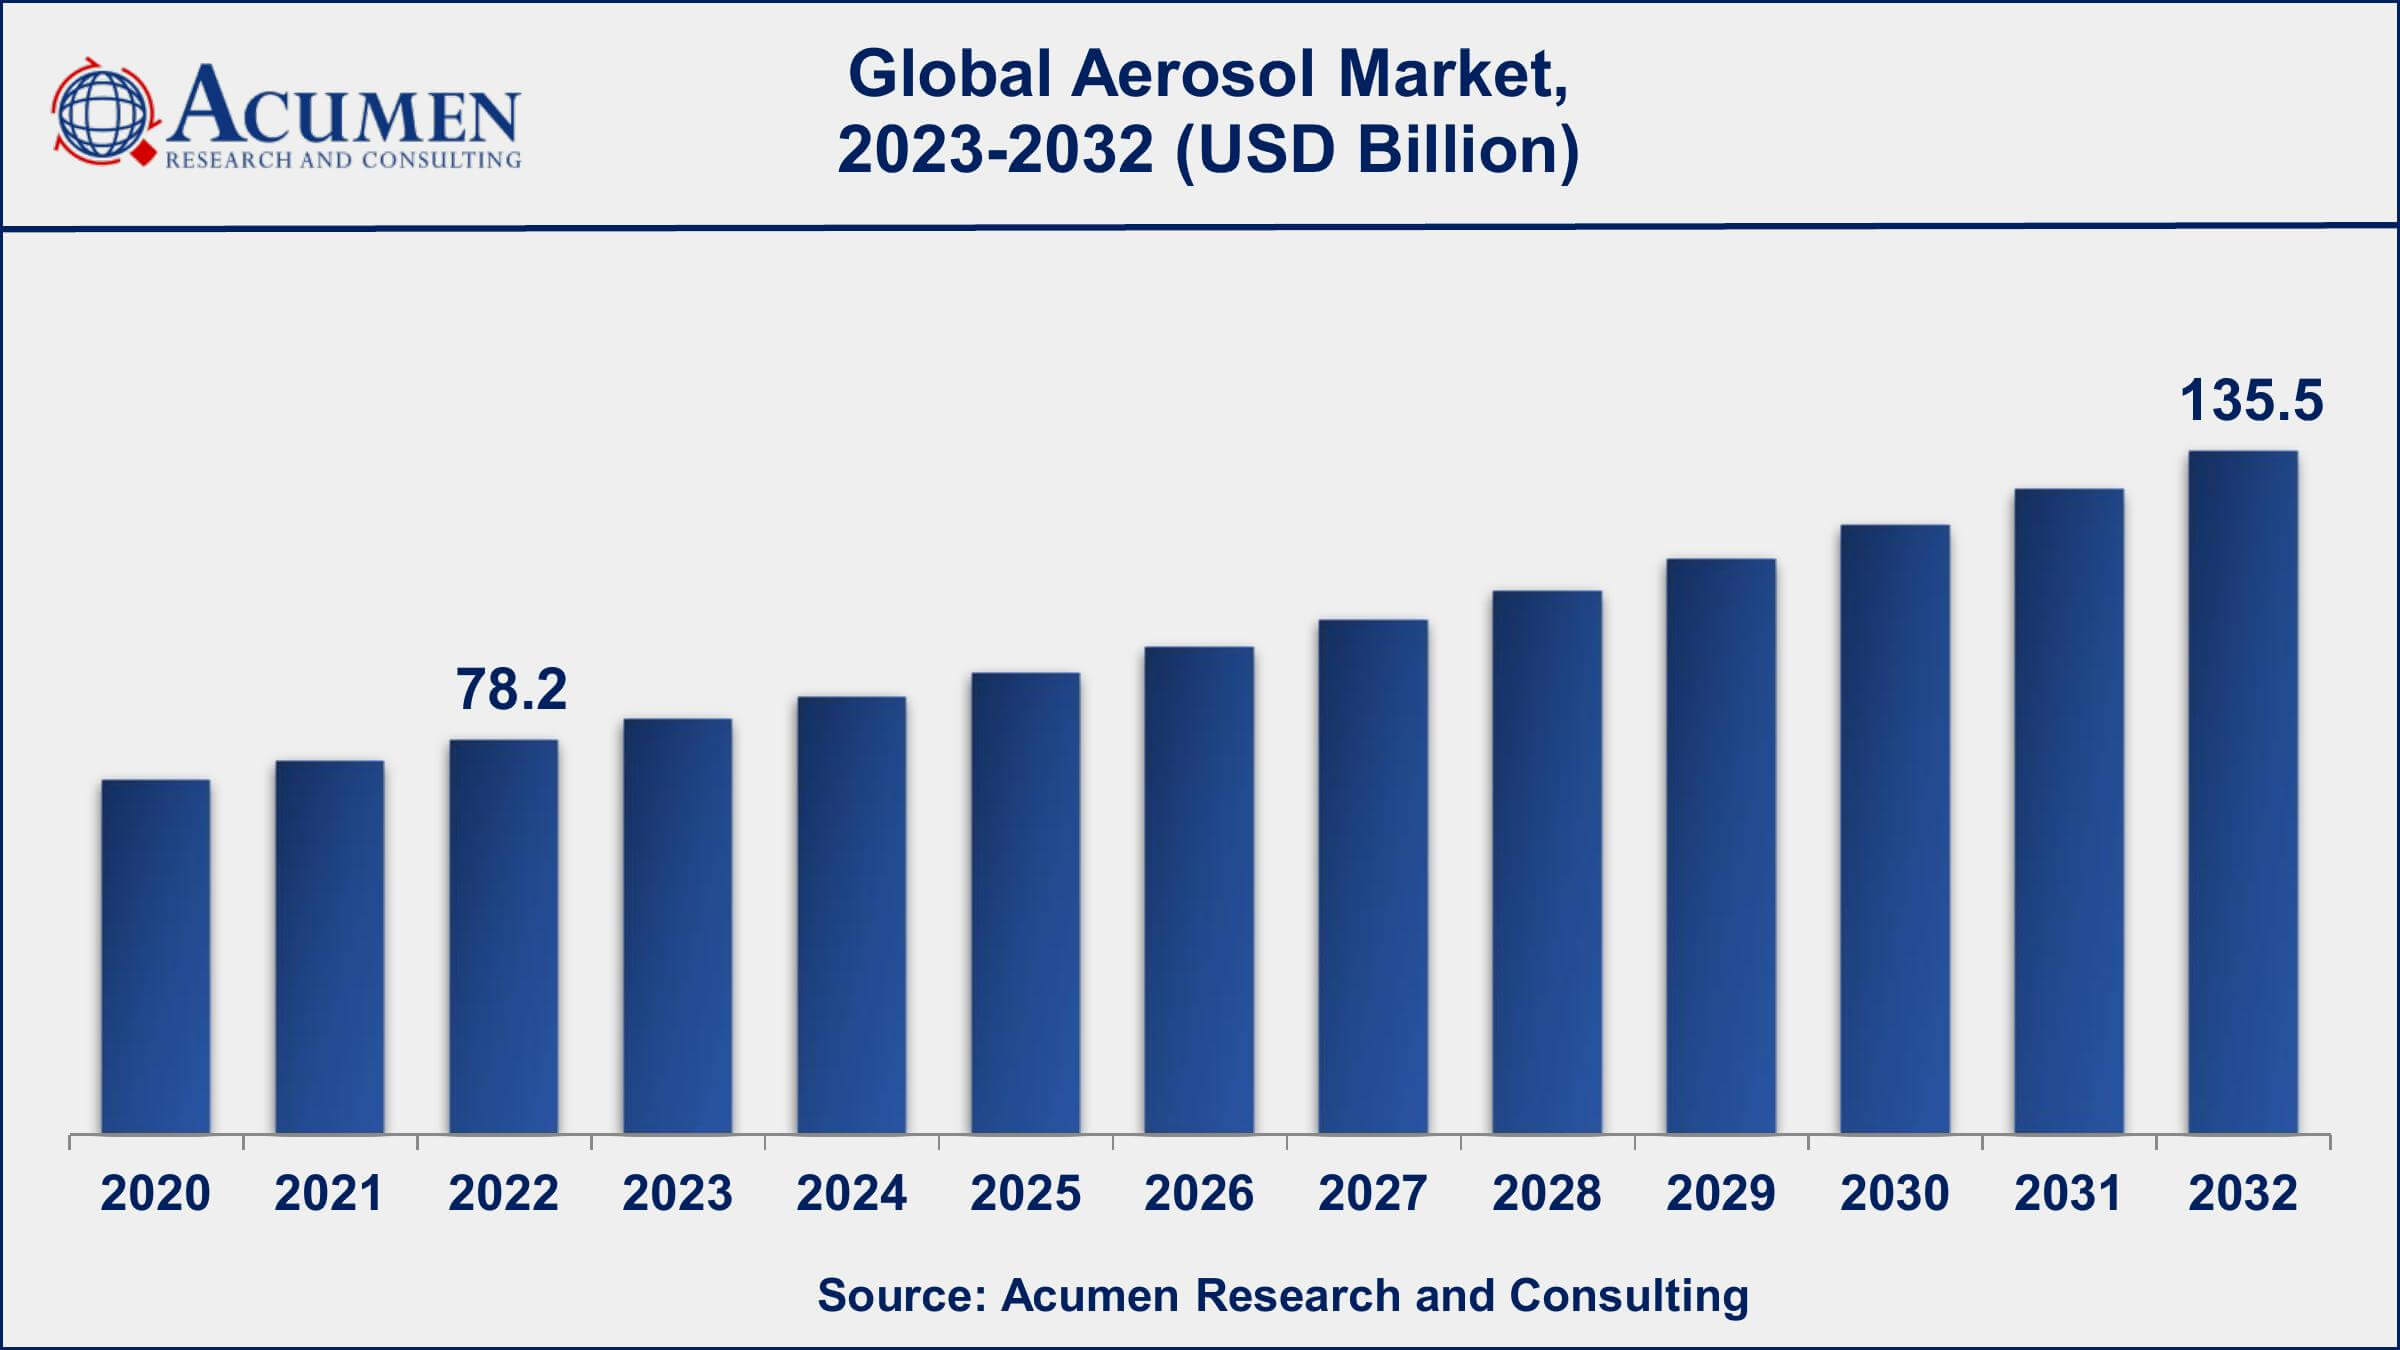 Global Aerosol Market Dynamics